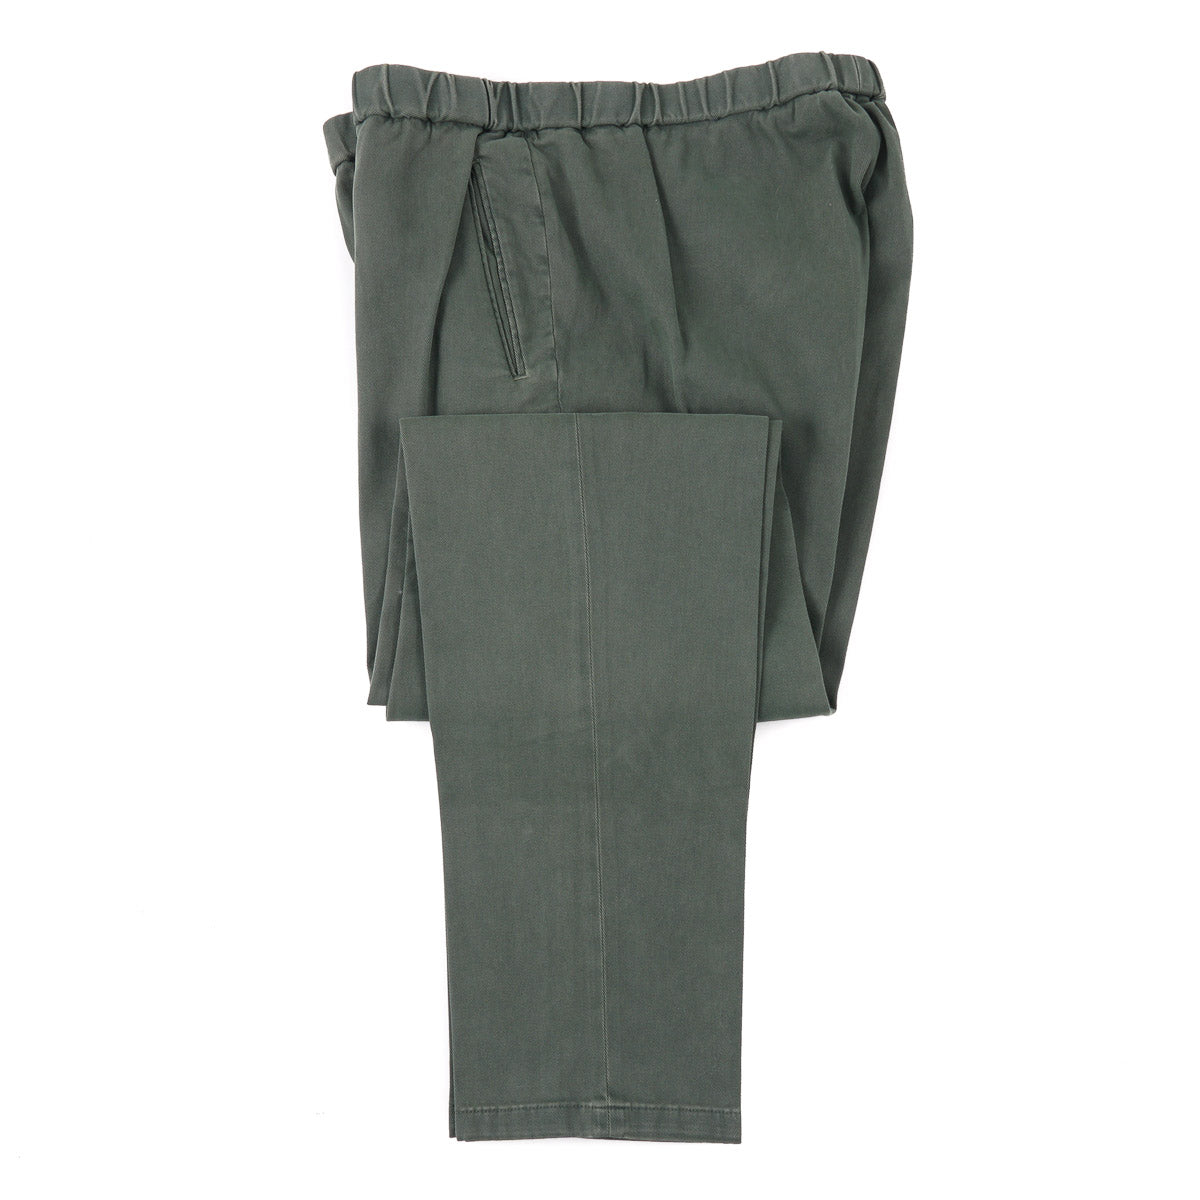 Boglioli Military Pants with Drawstring Waist - Top Shelf Apparel